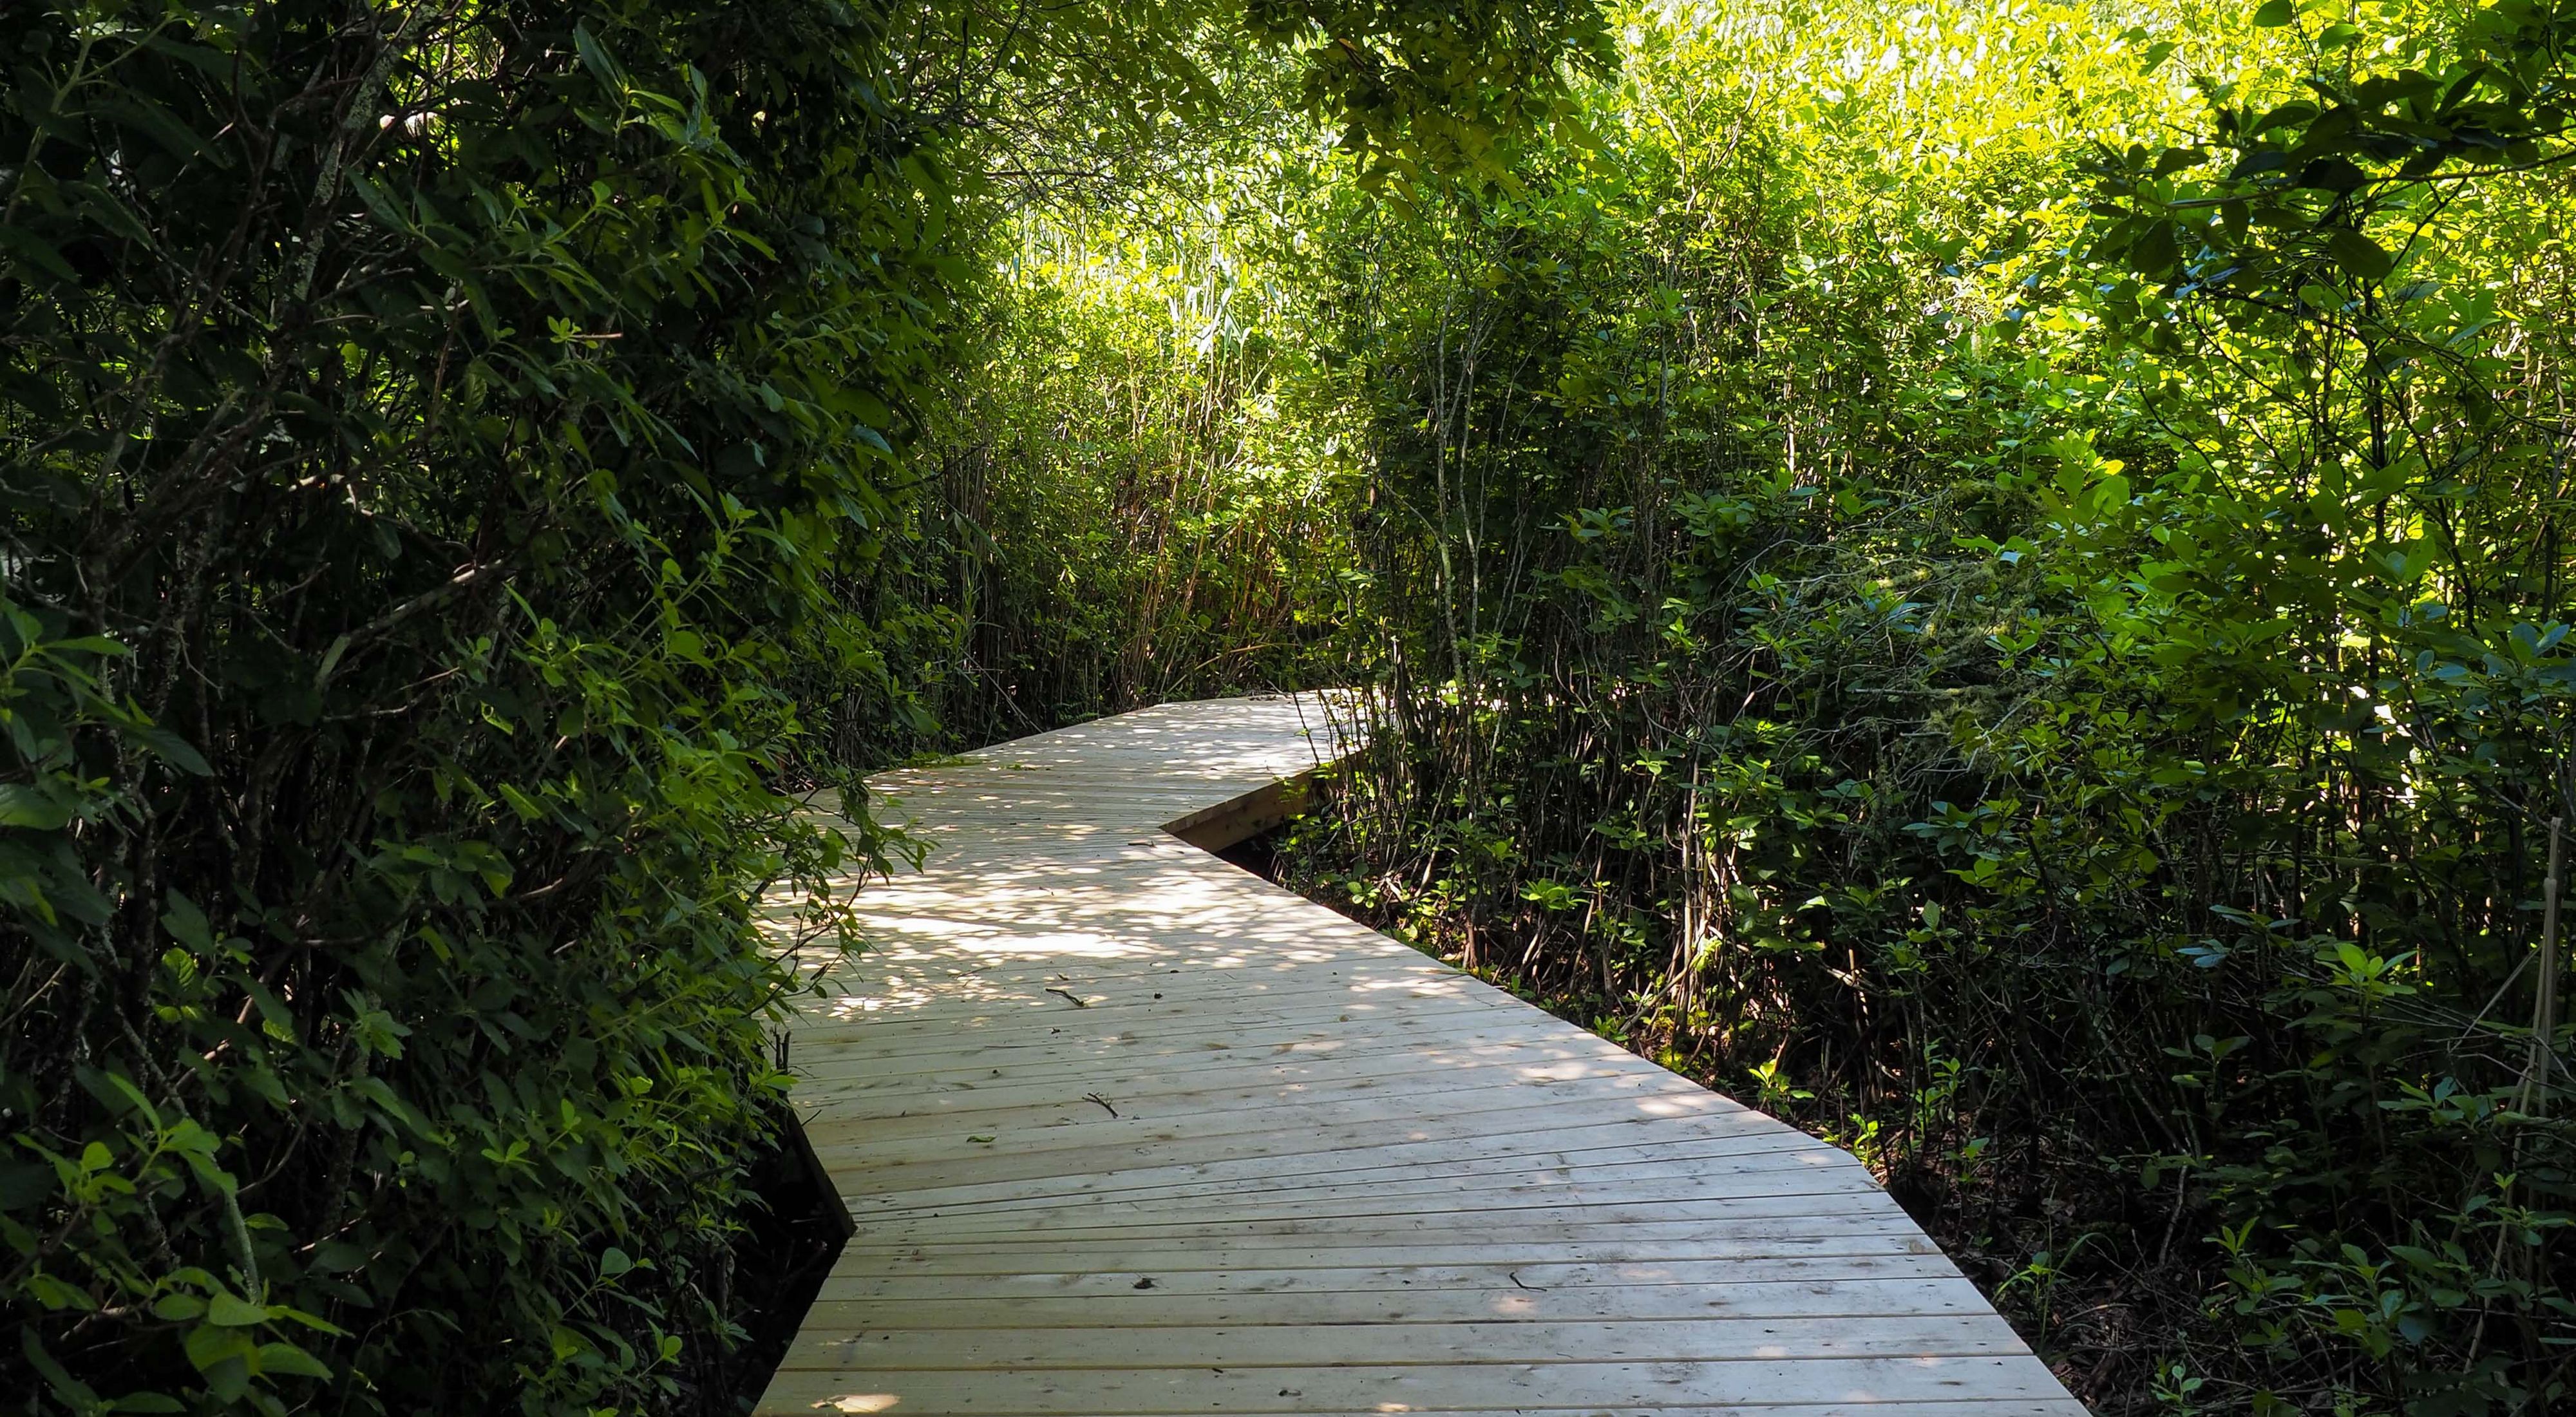 A boardwalk runs through a densely wooded area.